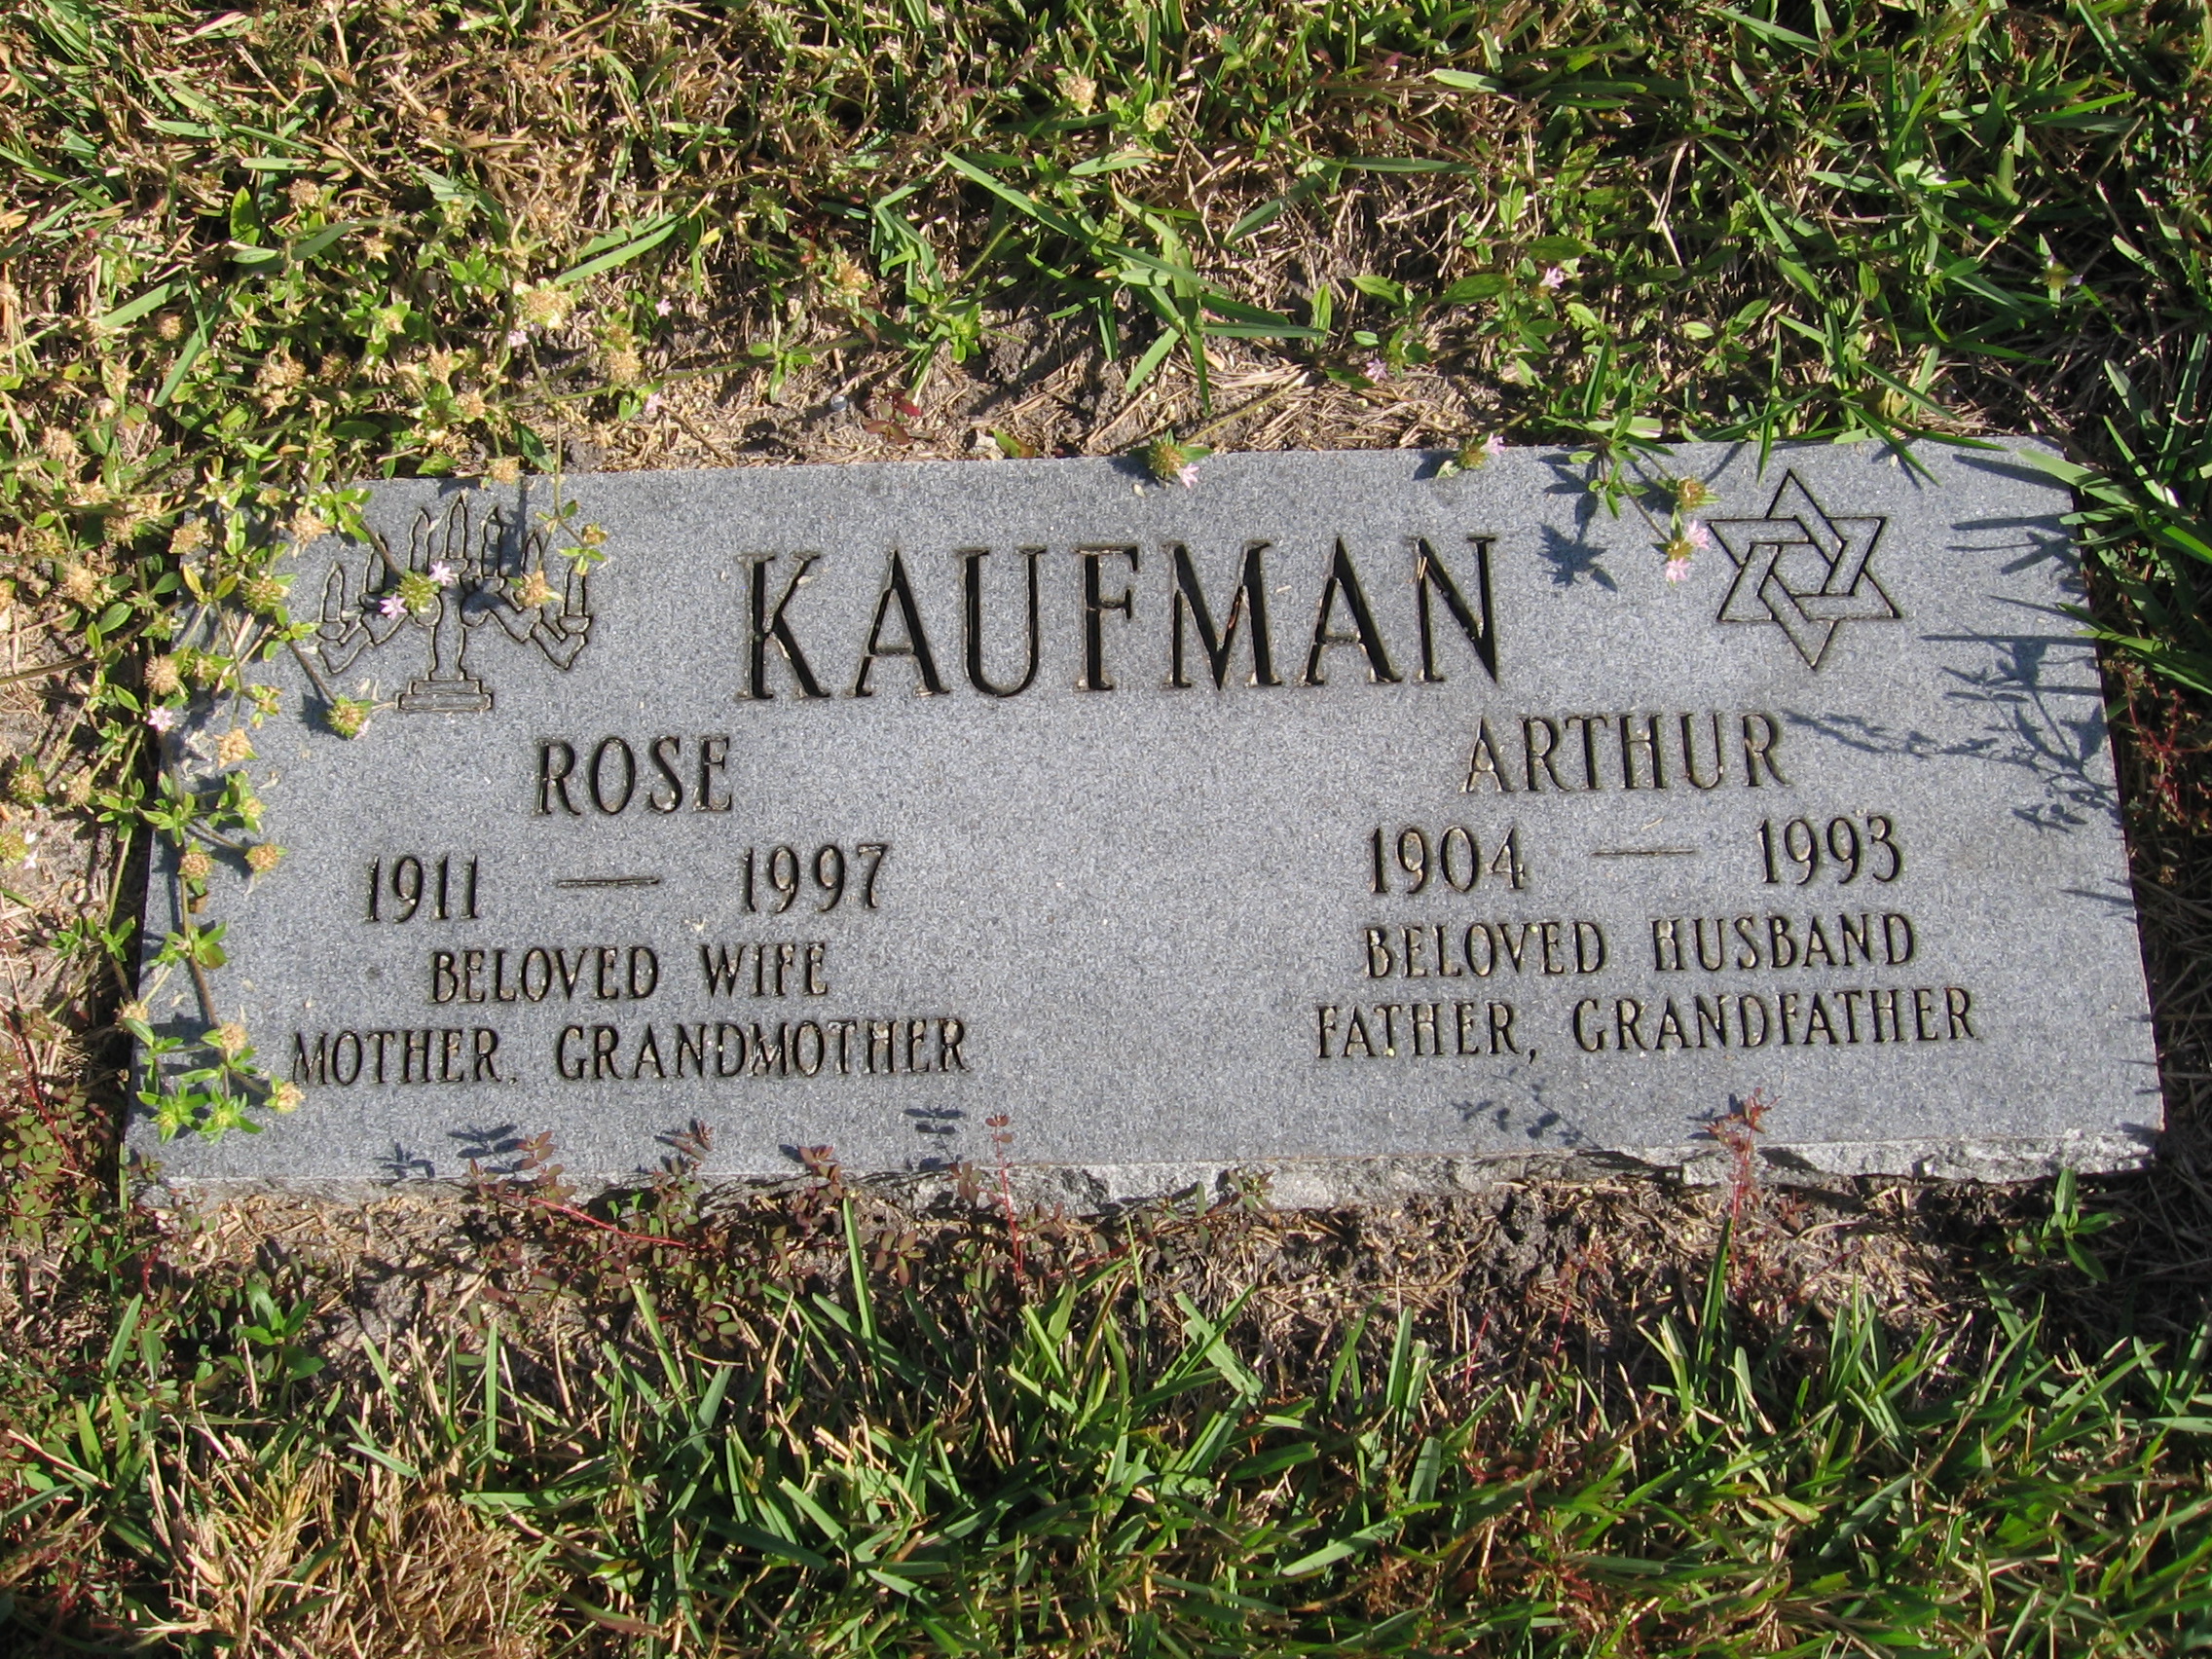 Arthur Kaufman